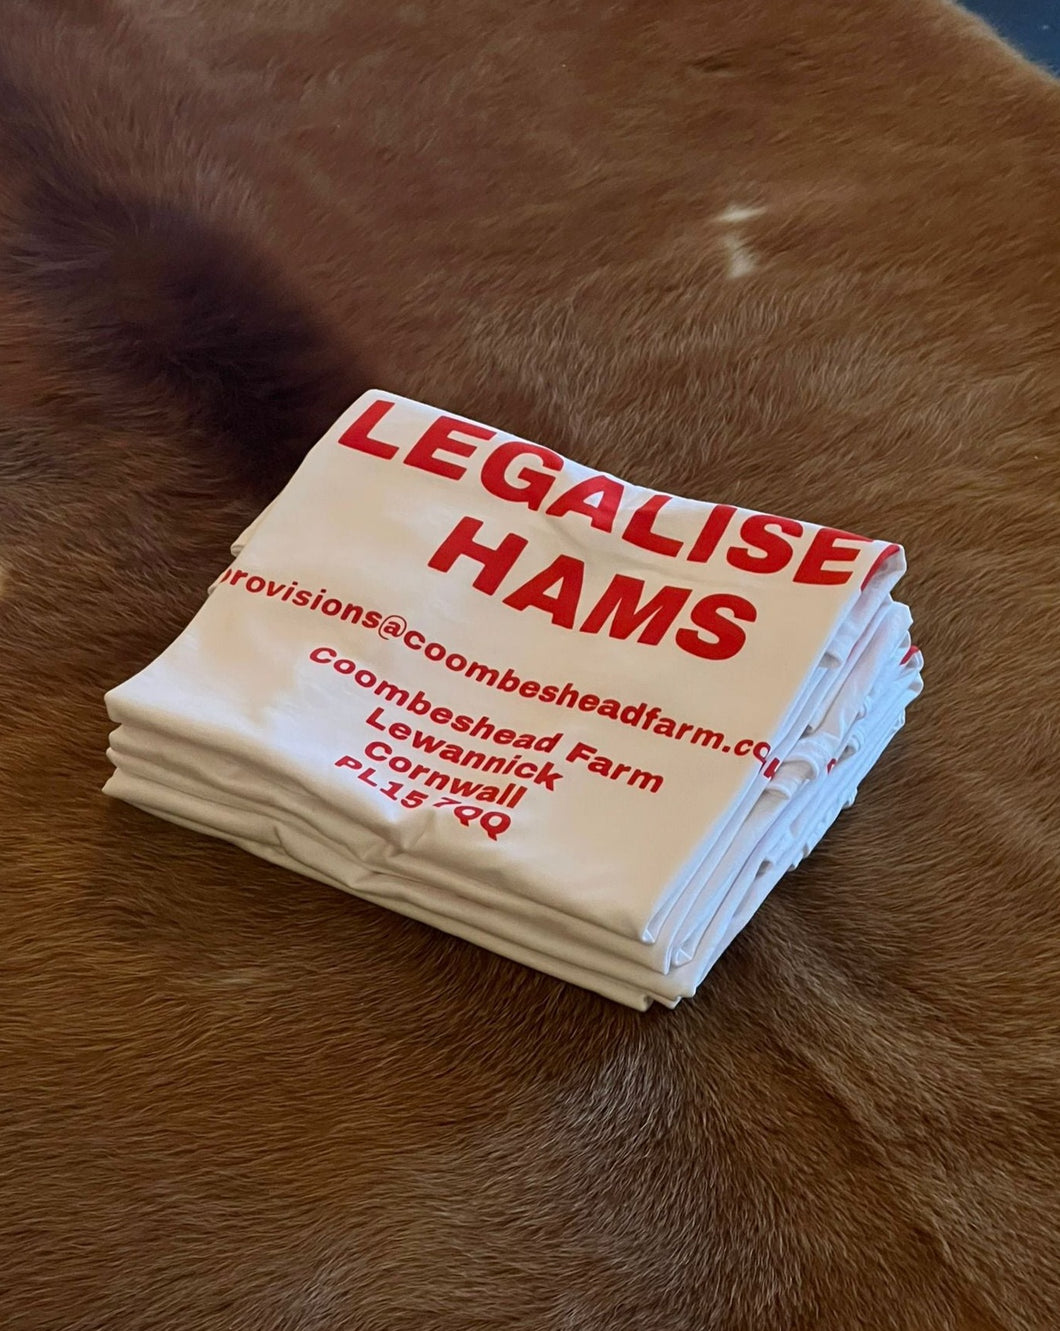 Legalised Ham T-shirt